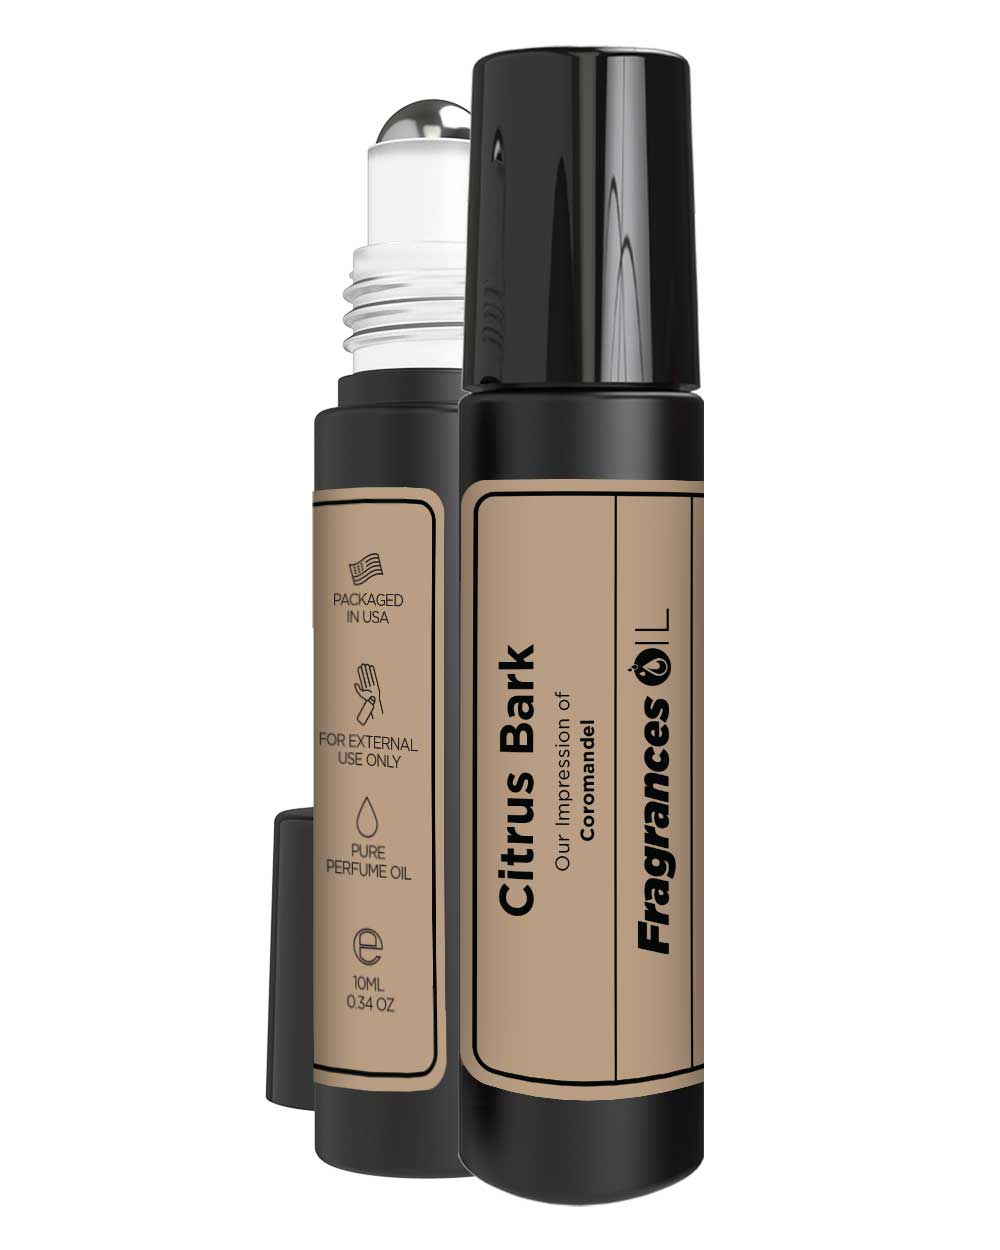 Buy Chanel - Coromandel for Women Perfume Oil